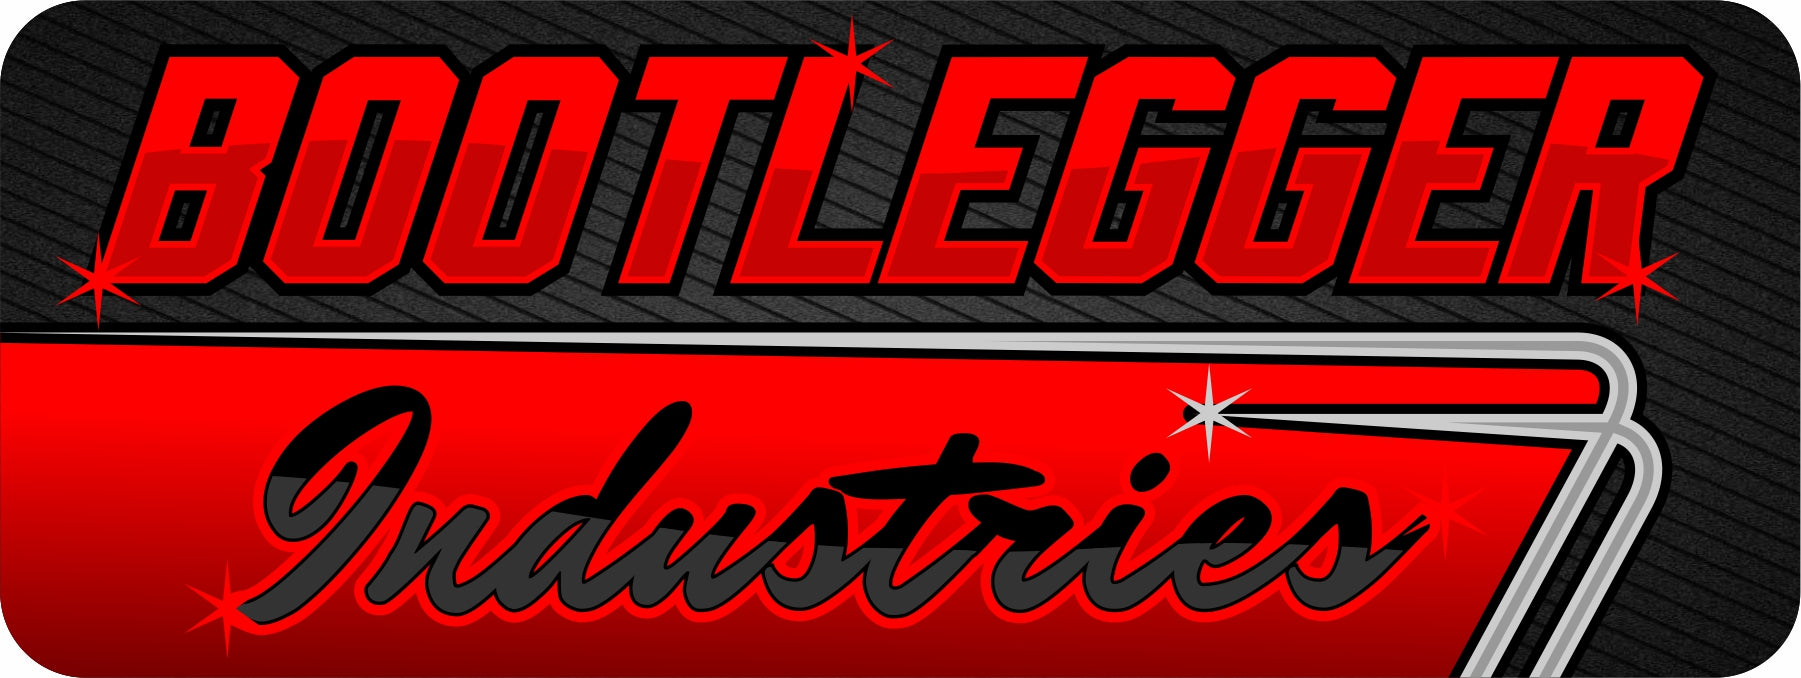 Bootlegger Industries LLC